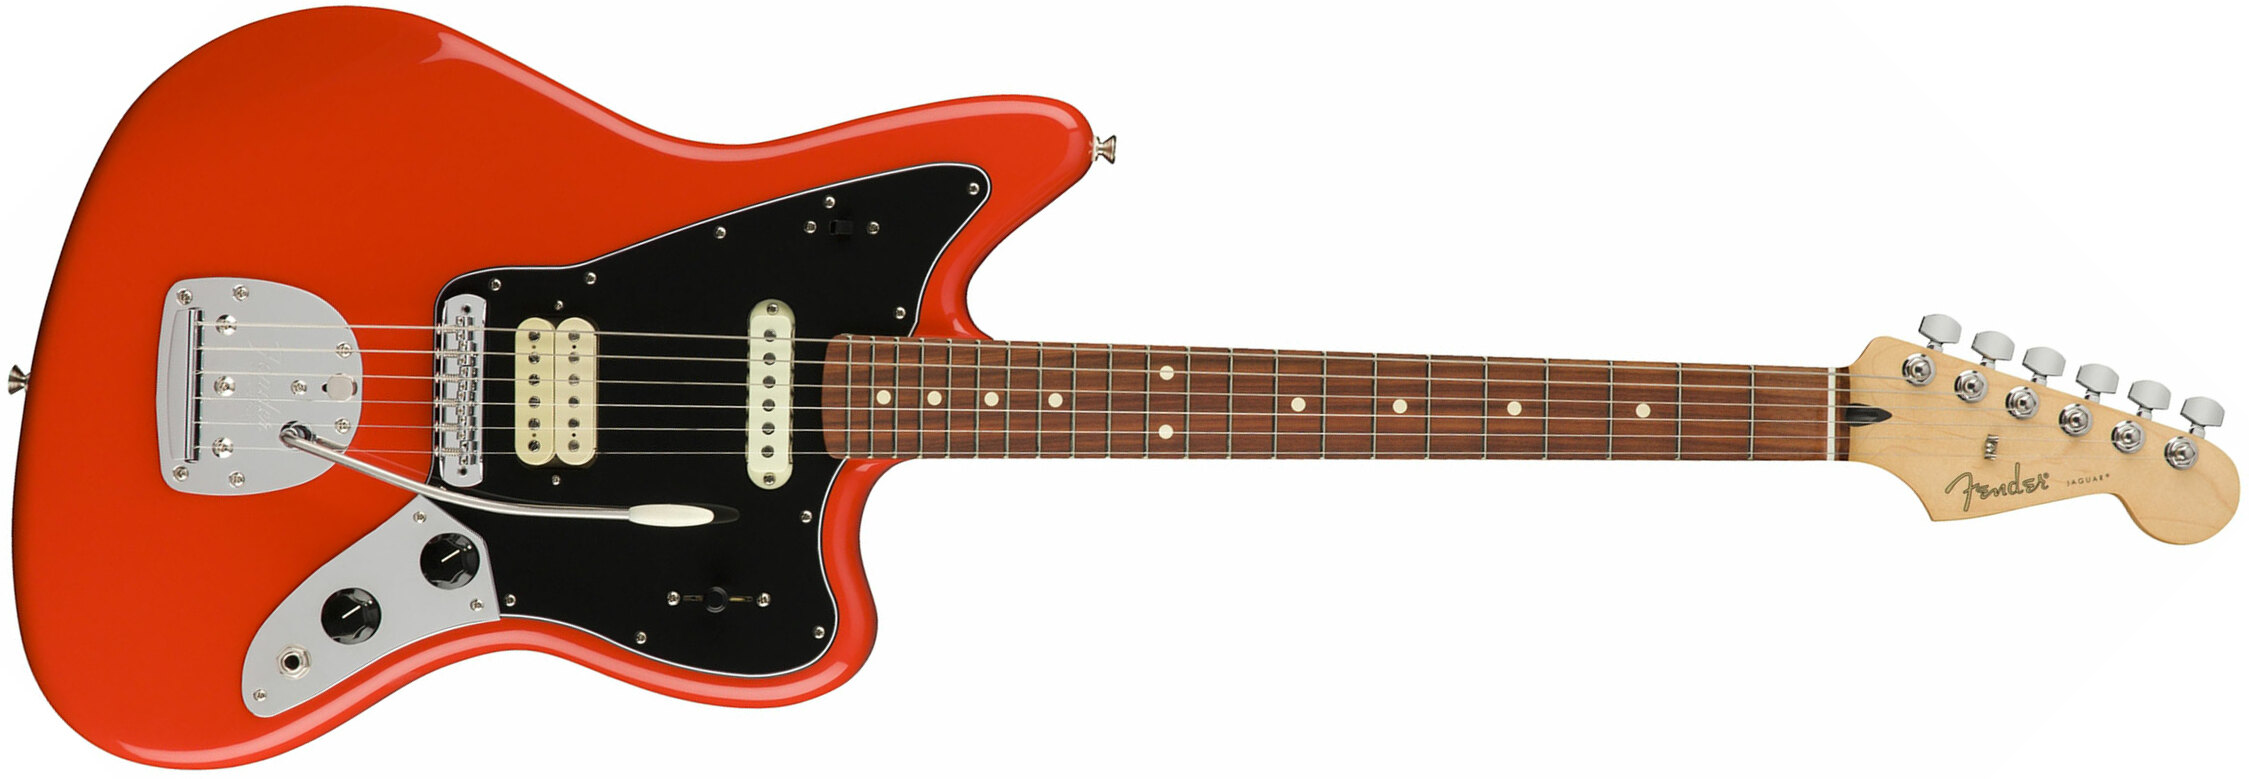 Fender Jaguar Player Mex Hs Pf - Sonic Red - Guitarra electrica retro rock - Main picture